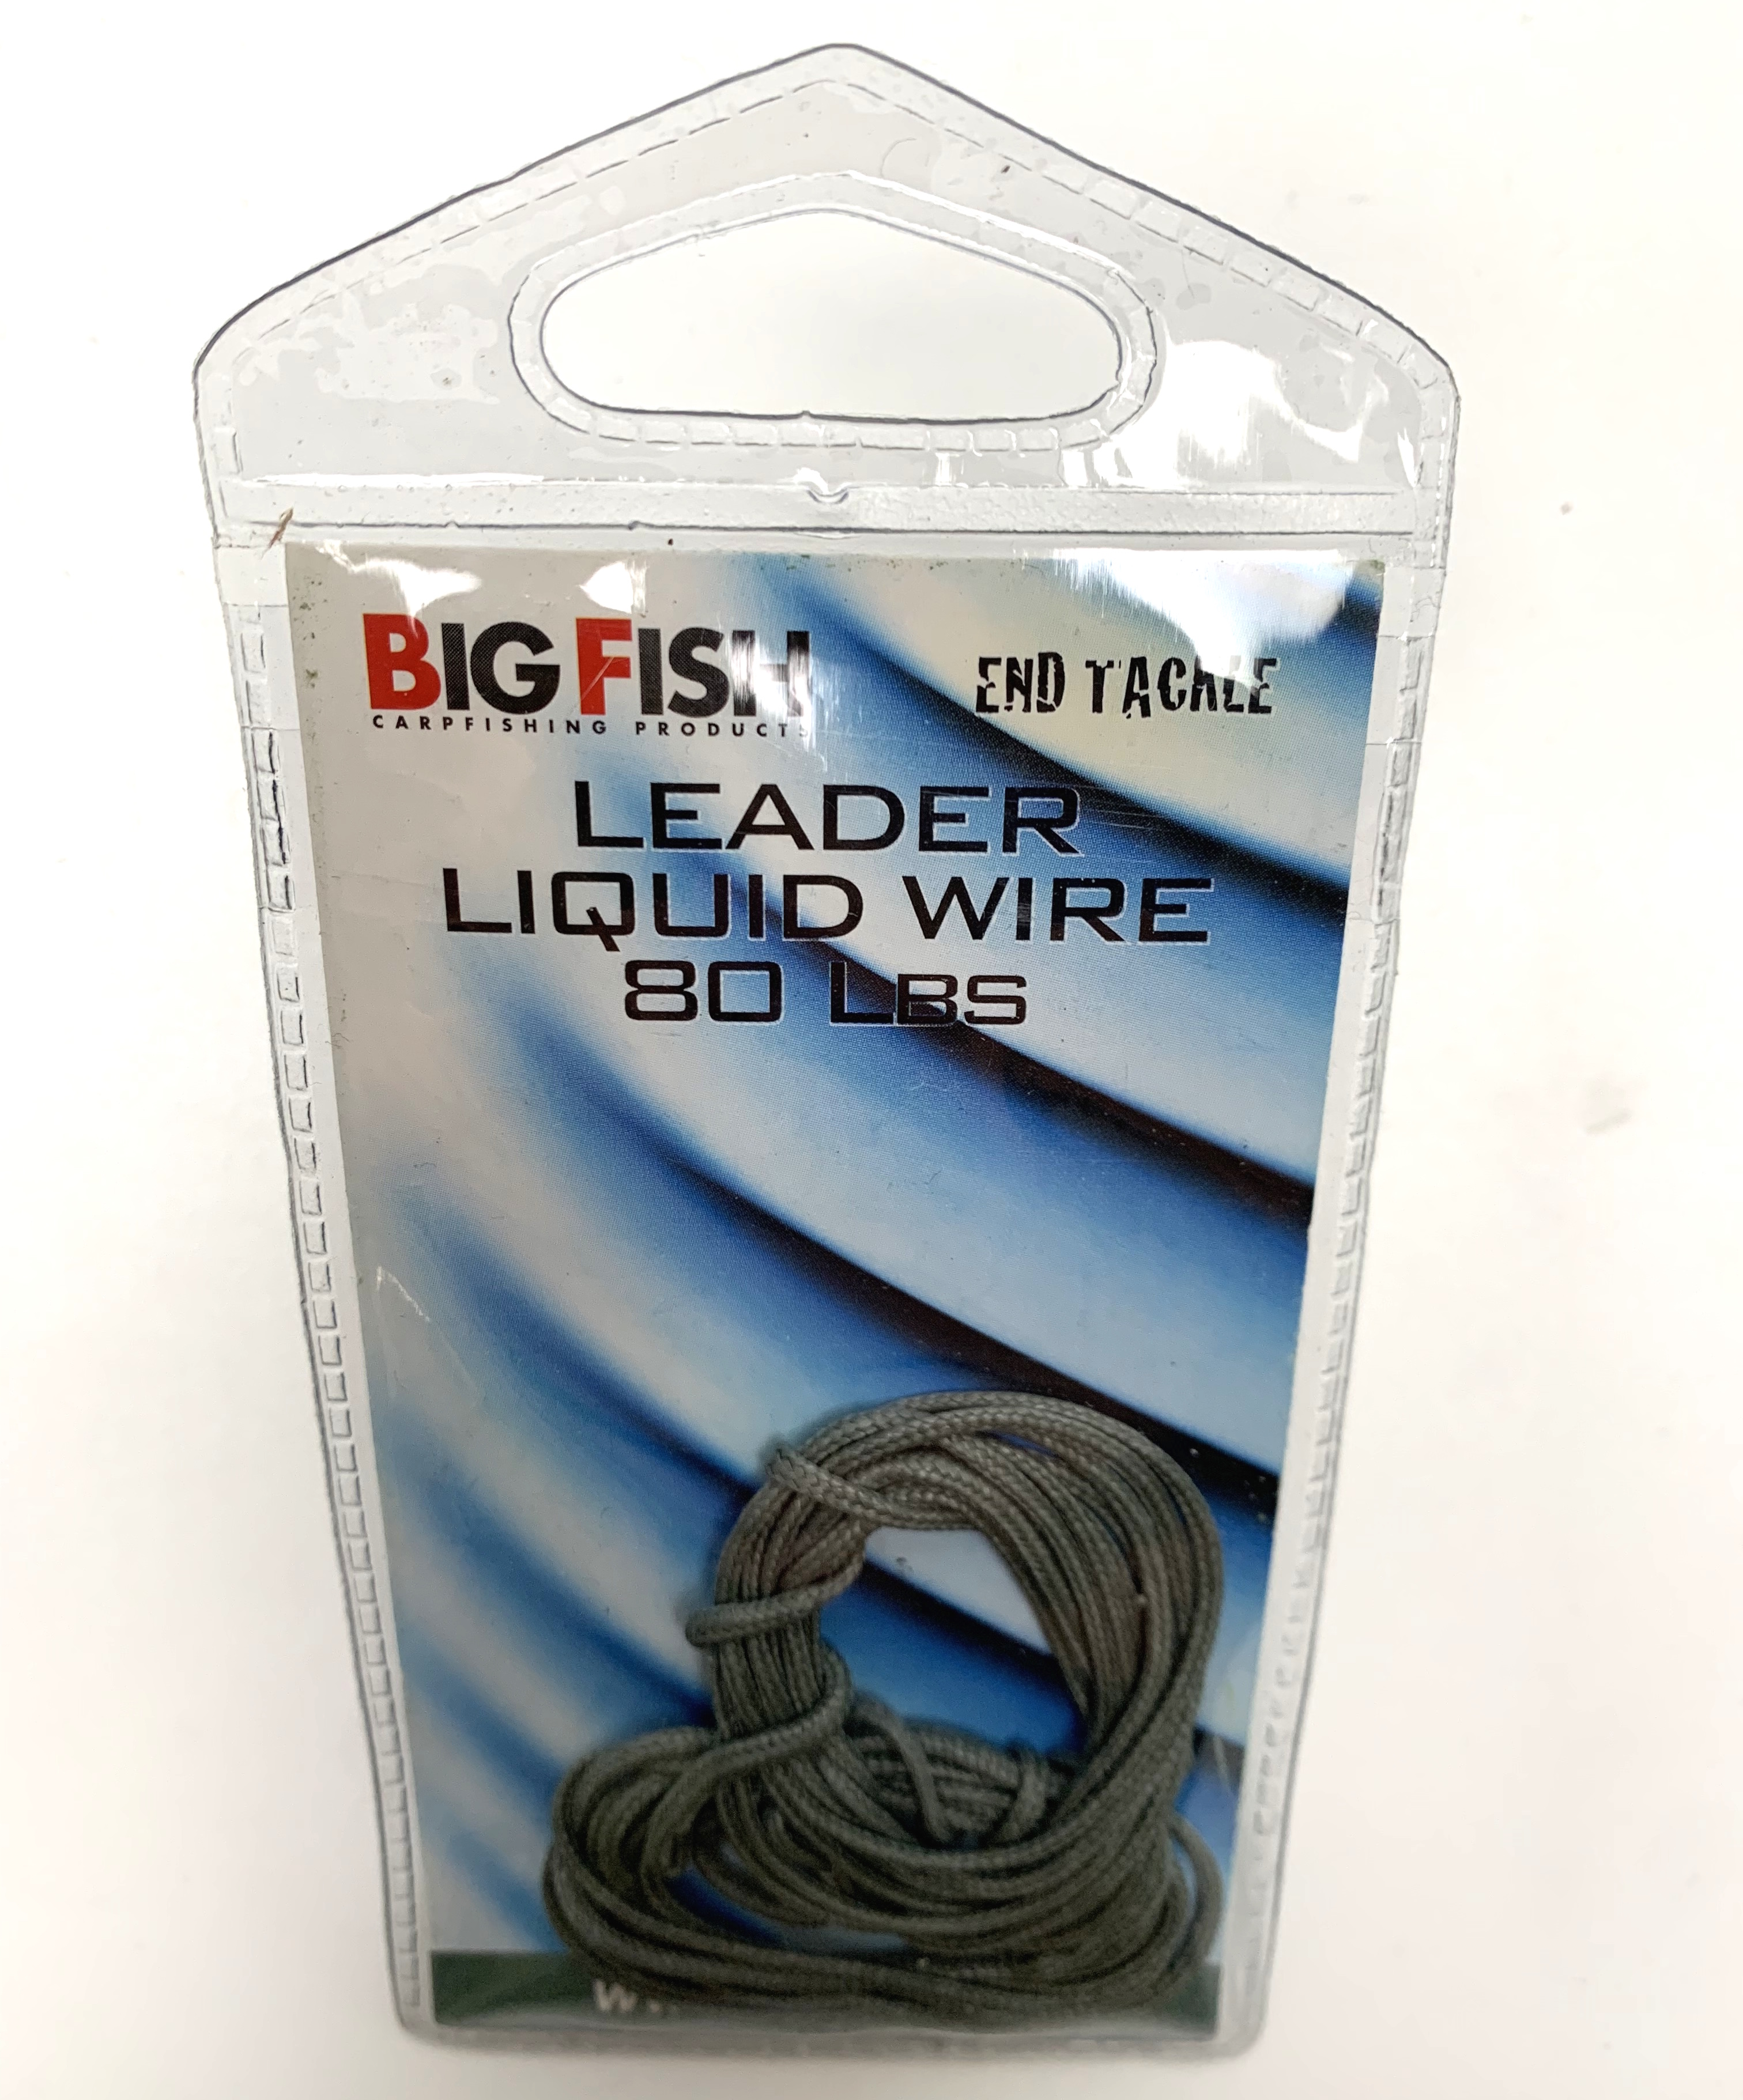 Ladcore Big Fish Leader Liquid wire 80 lbs 100 cm